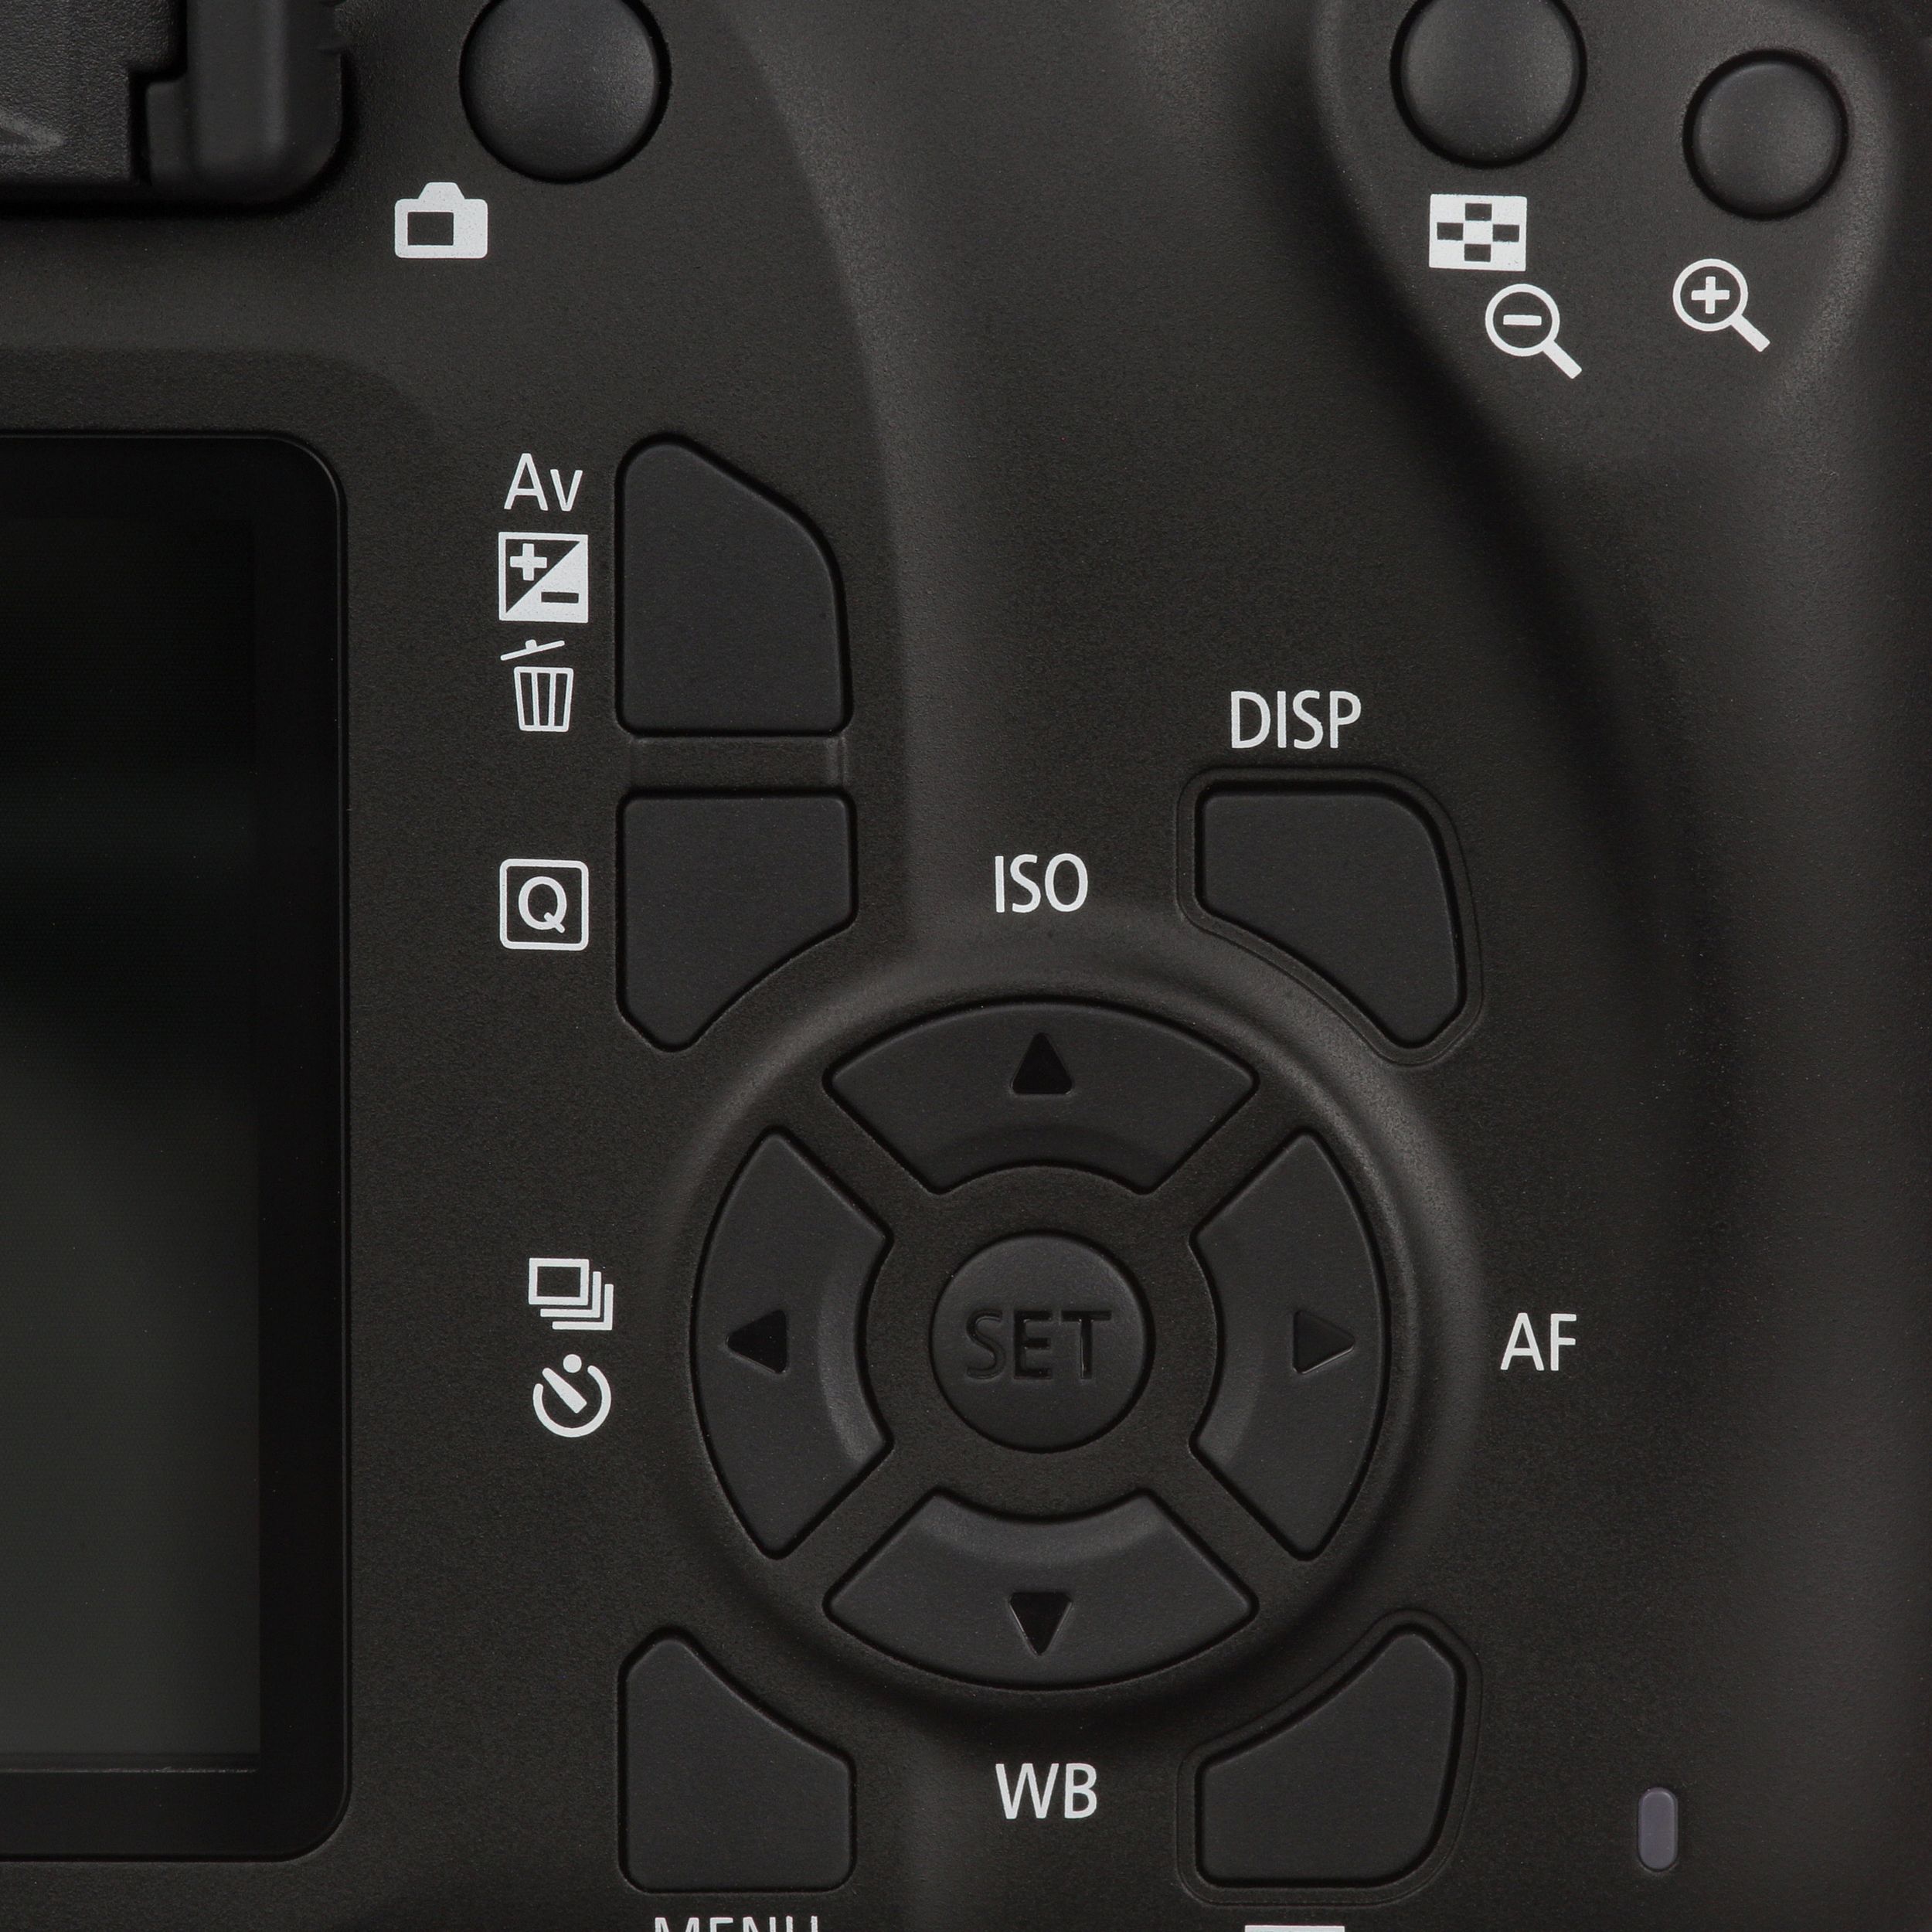 Canon EOS Rebel T100 Digital SLR Camera with 18-55mm Lens Kit, 18 Megapixel Sensor, Wi-Fi, DIGIC4+, SanDisk 32GB Memory Card and Live View Shooting - image 4 of 8